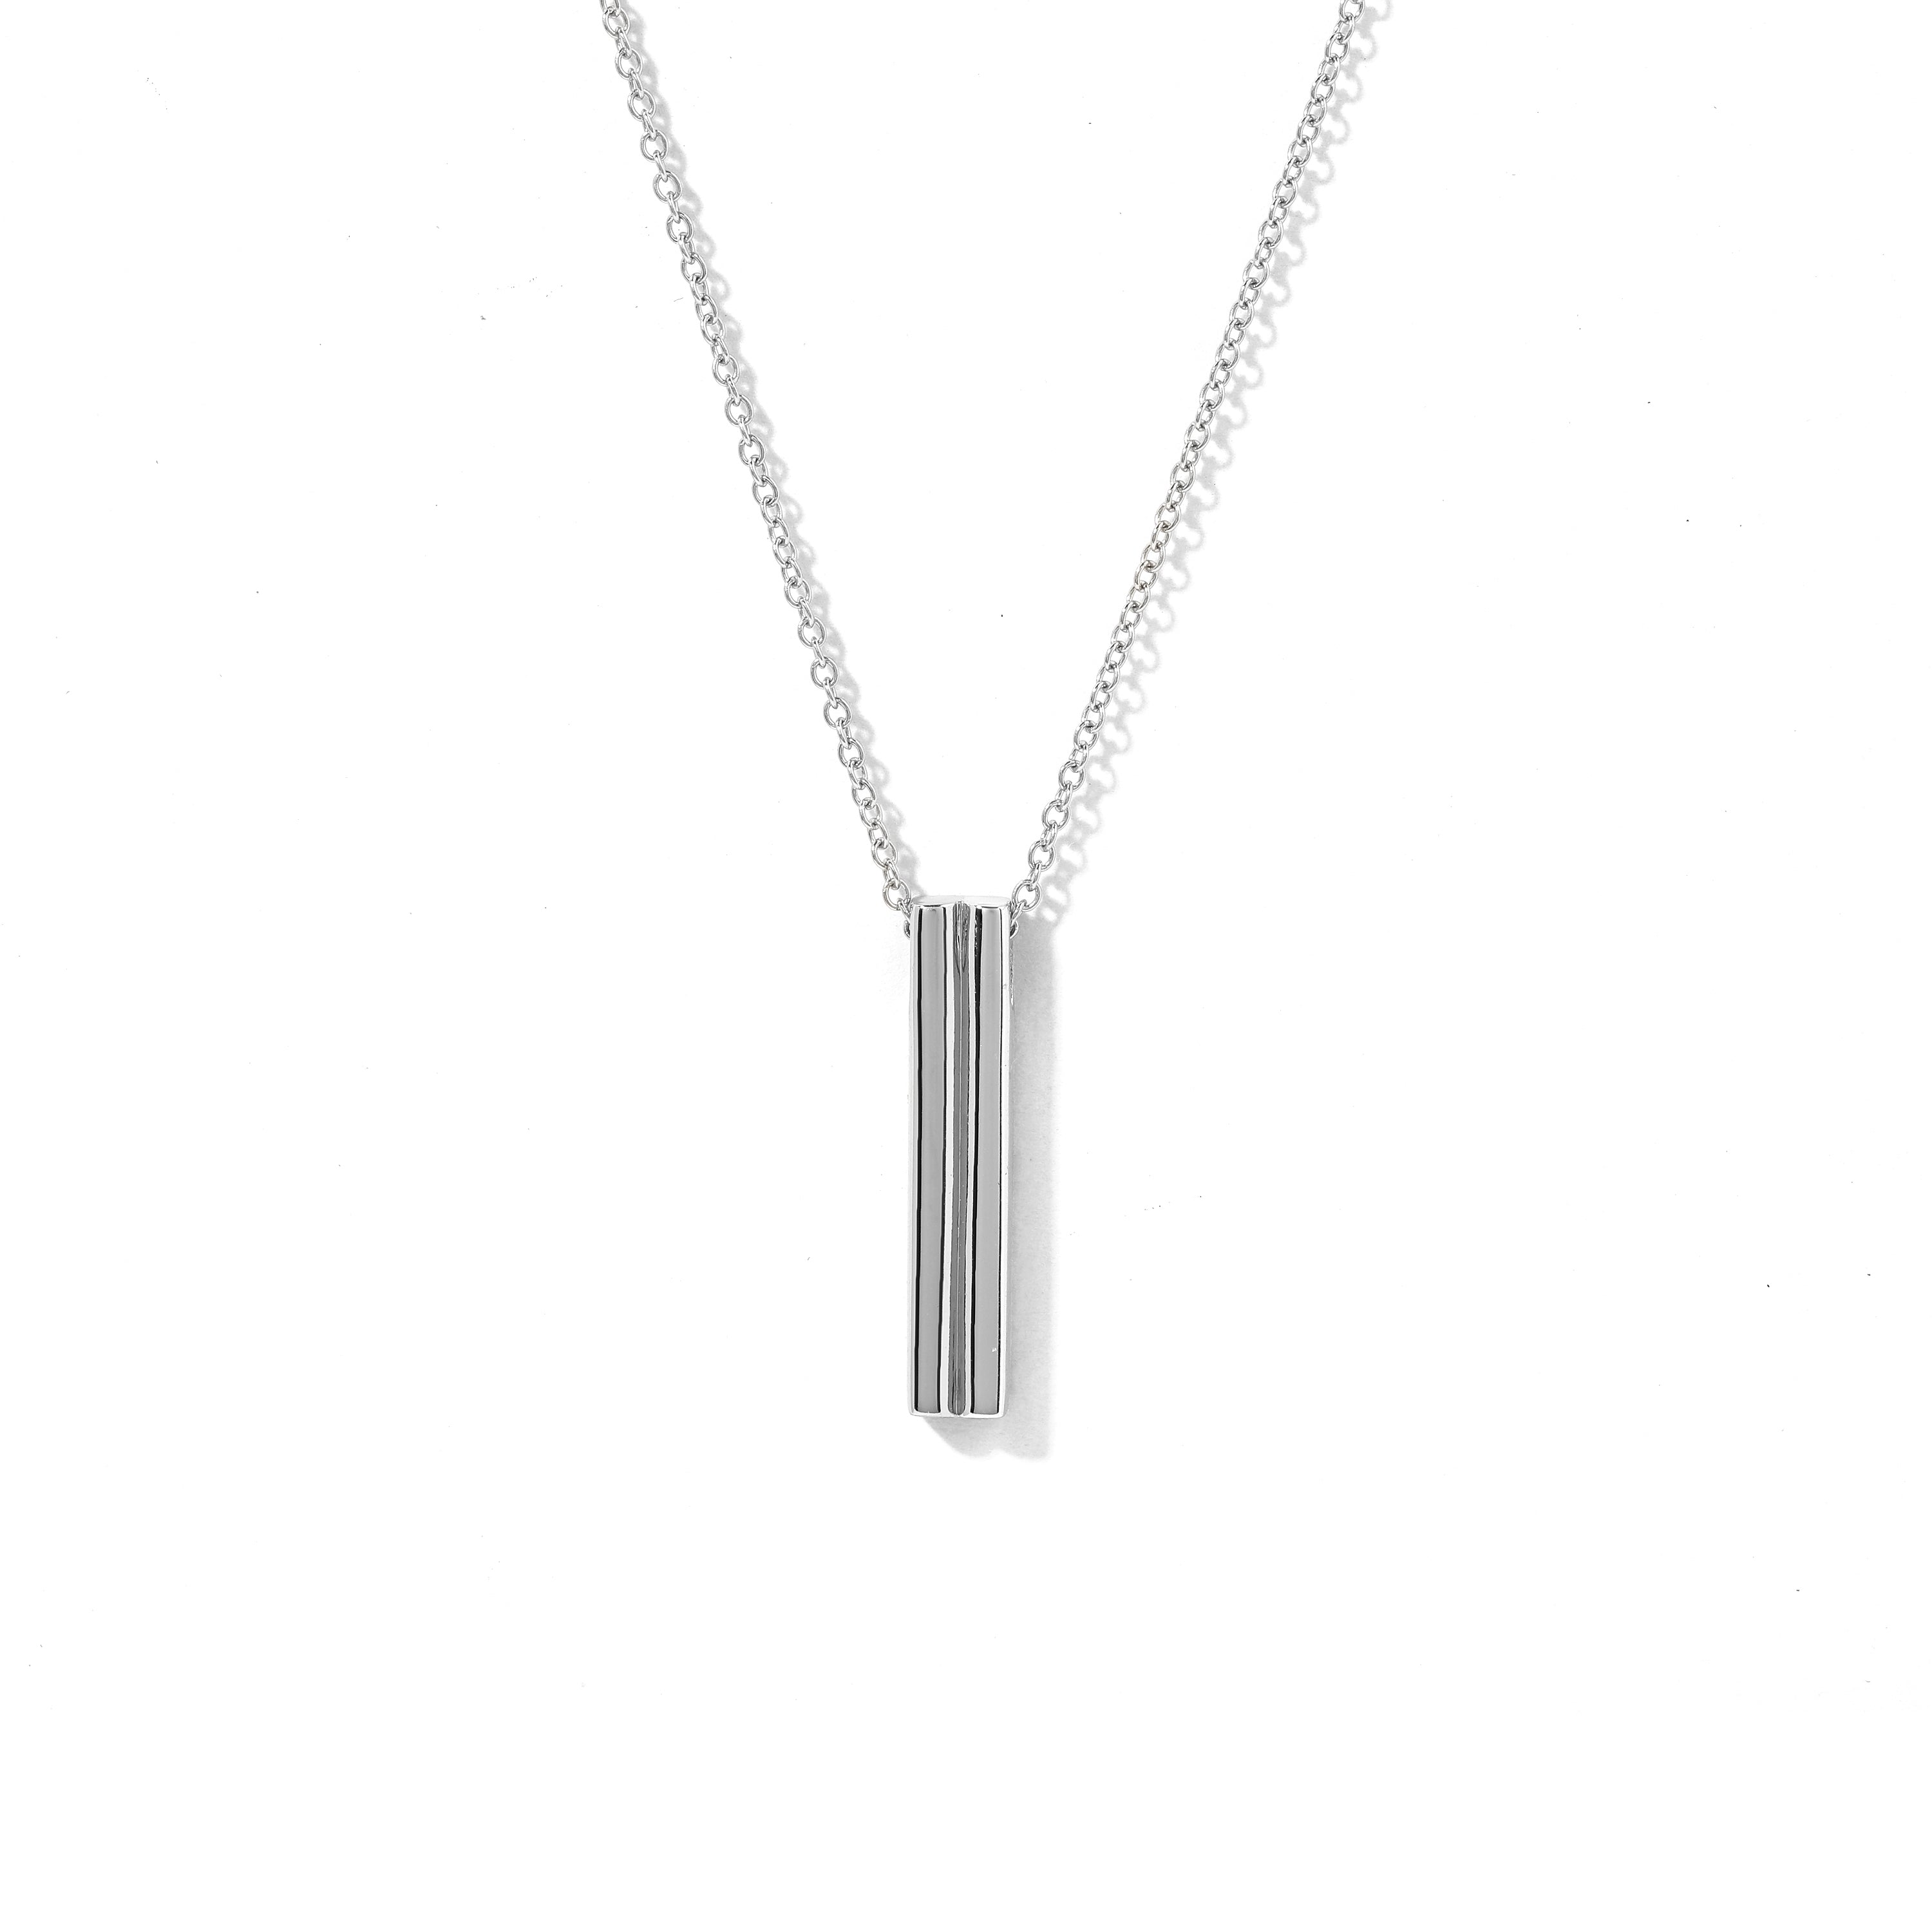 Elegant and minimalist necklace. 925 silver bar pendant necklace.